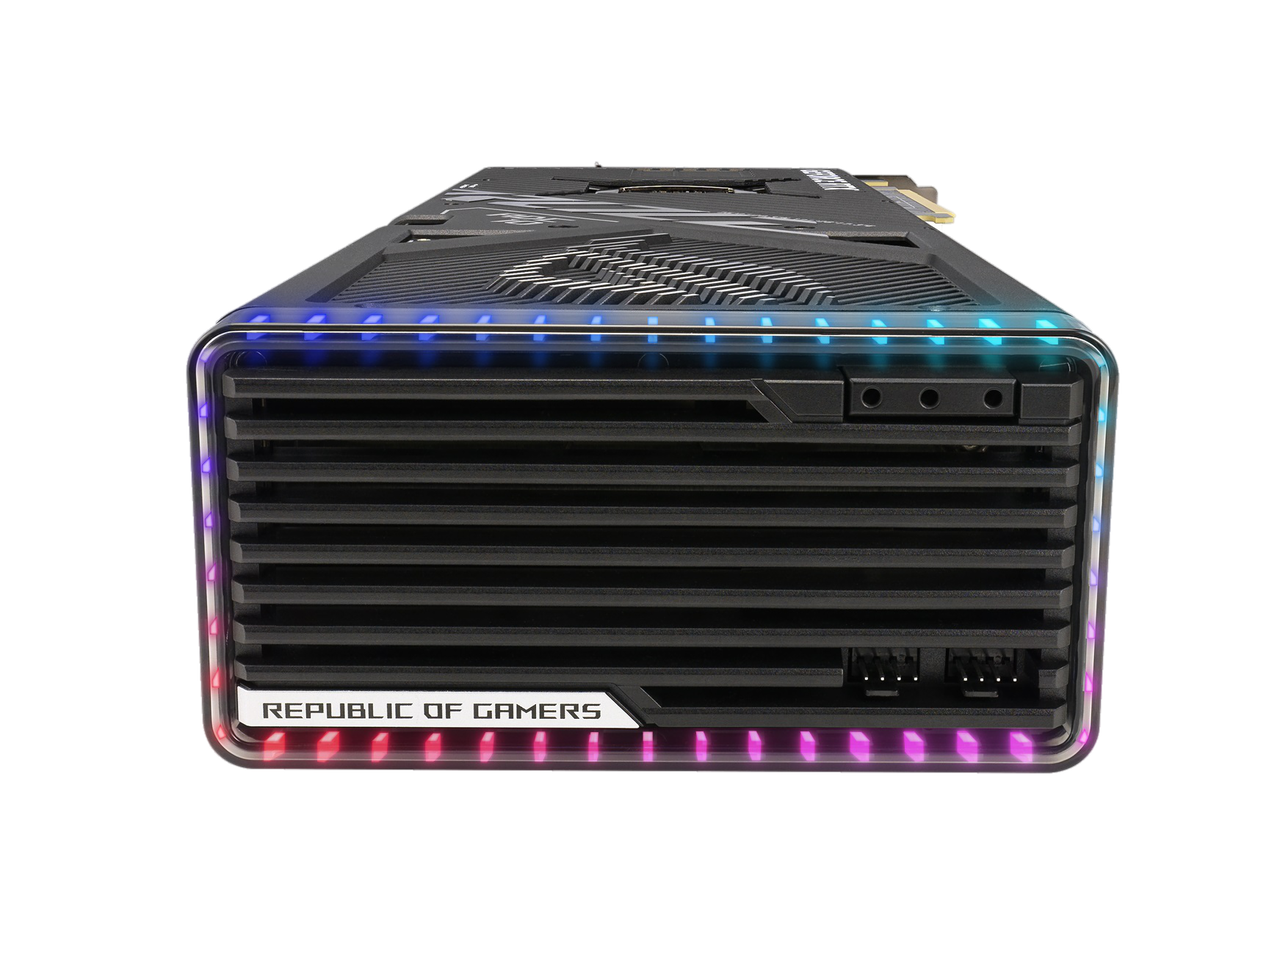 ASUS ROG GeForce RTX 4090 24GB GDDR6X PCI Express 4.0 Video Card ROG-STRIX-RTX4090-O24G-GAMING